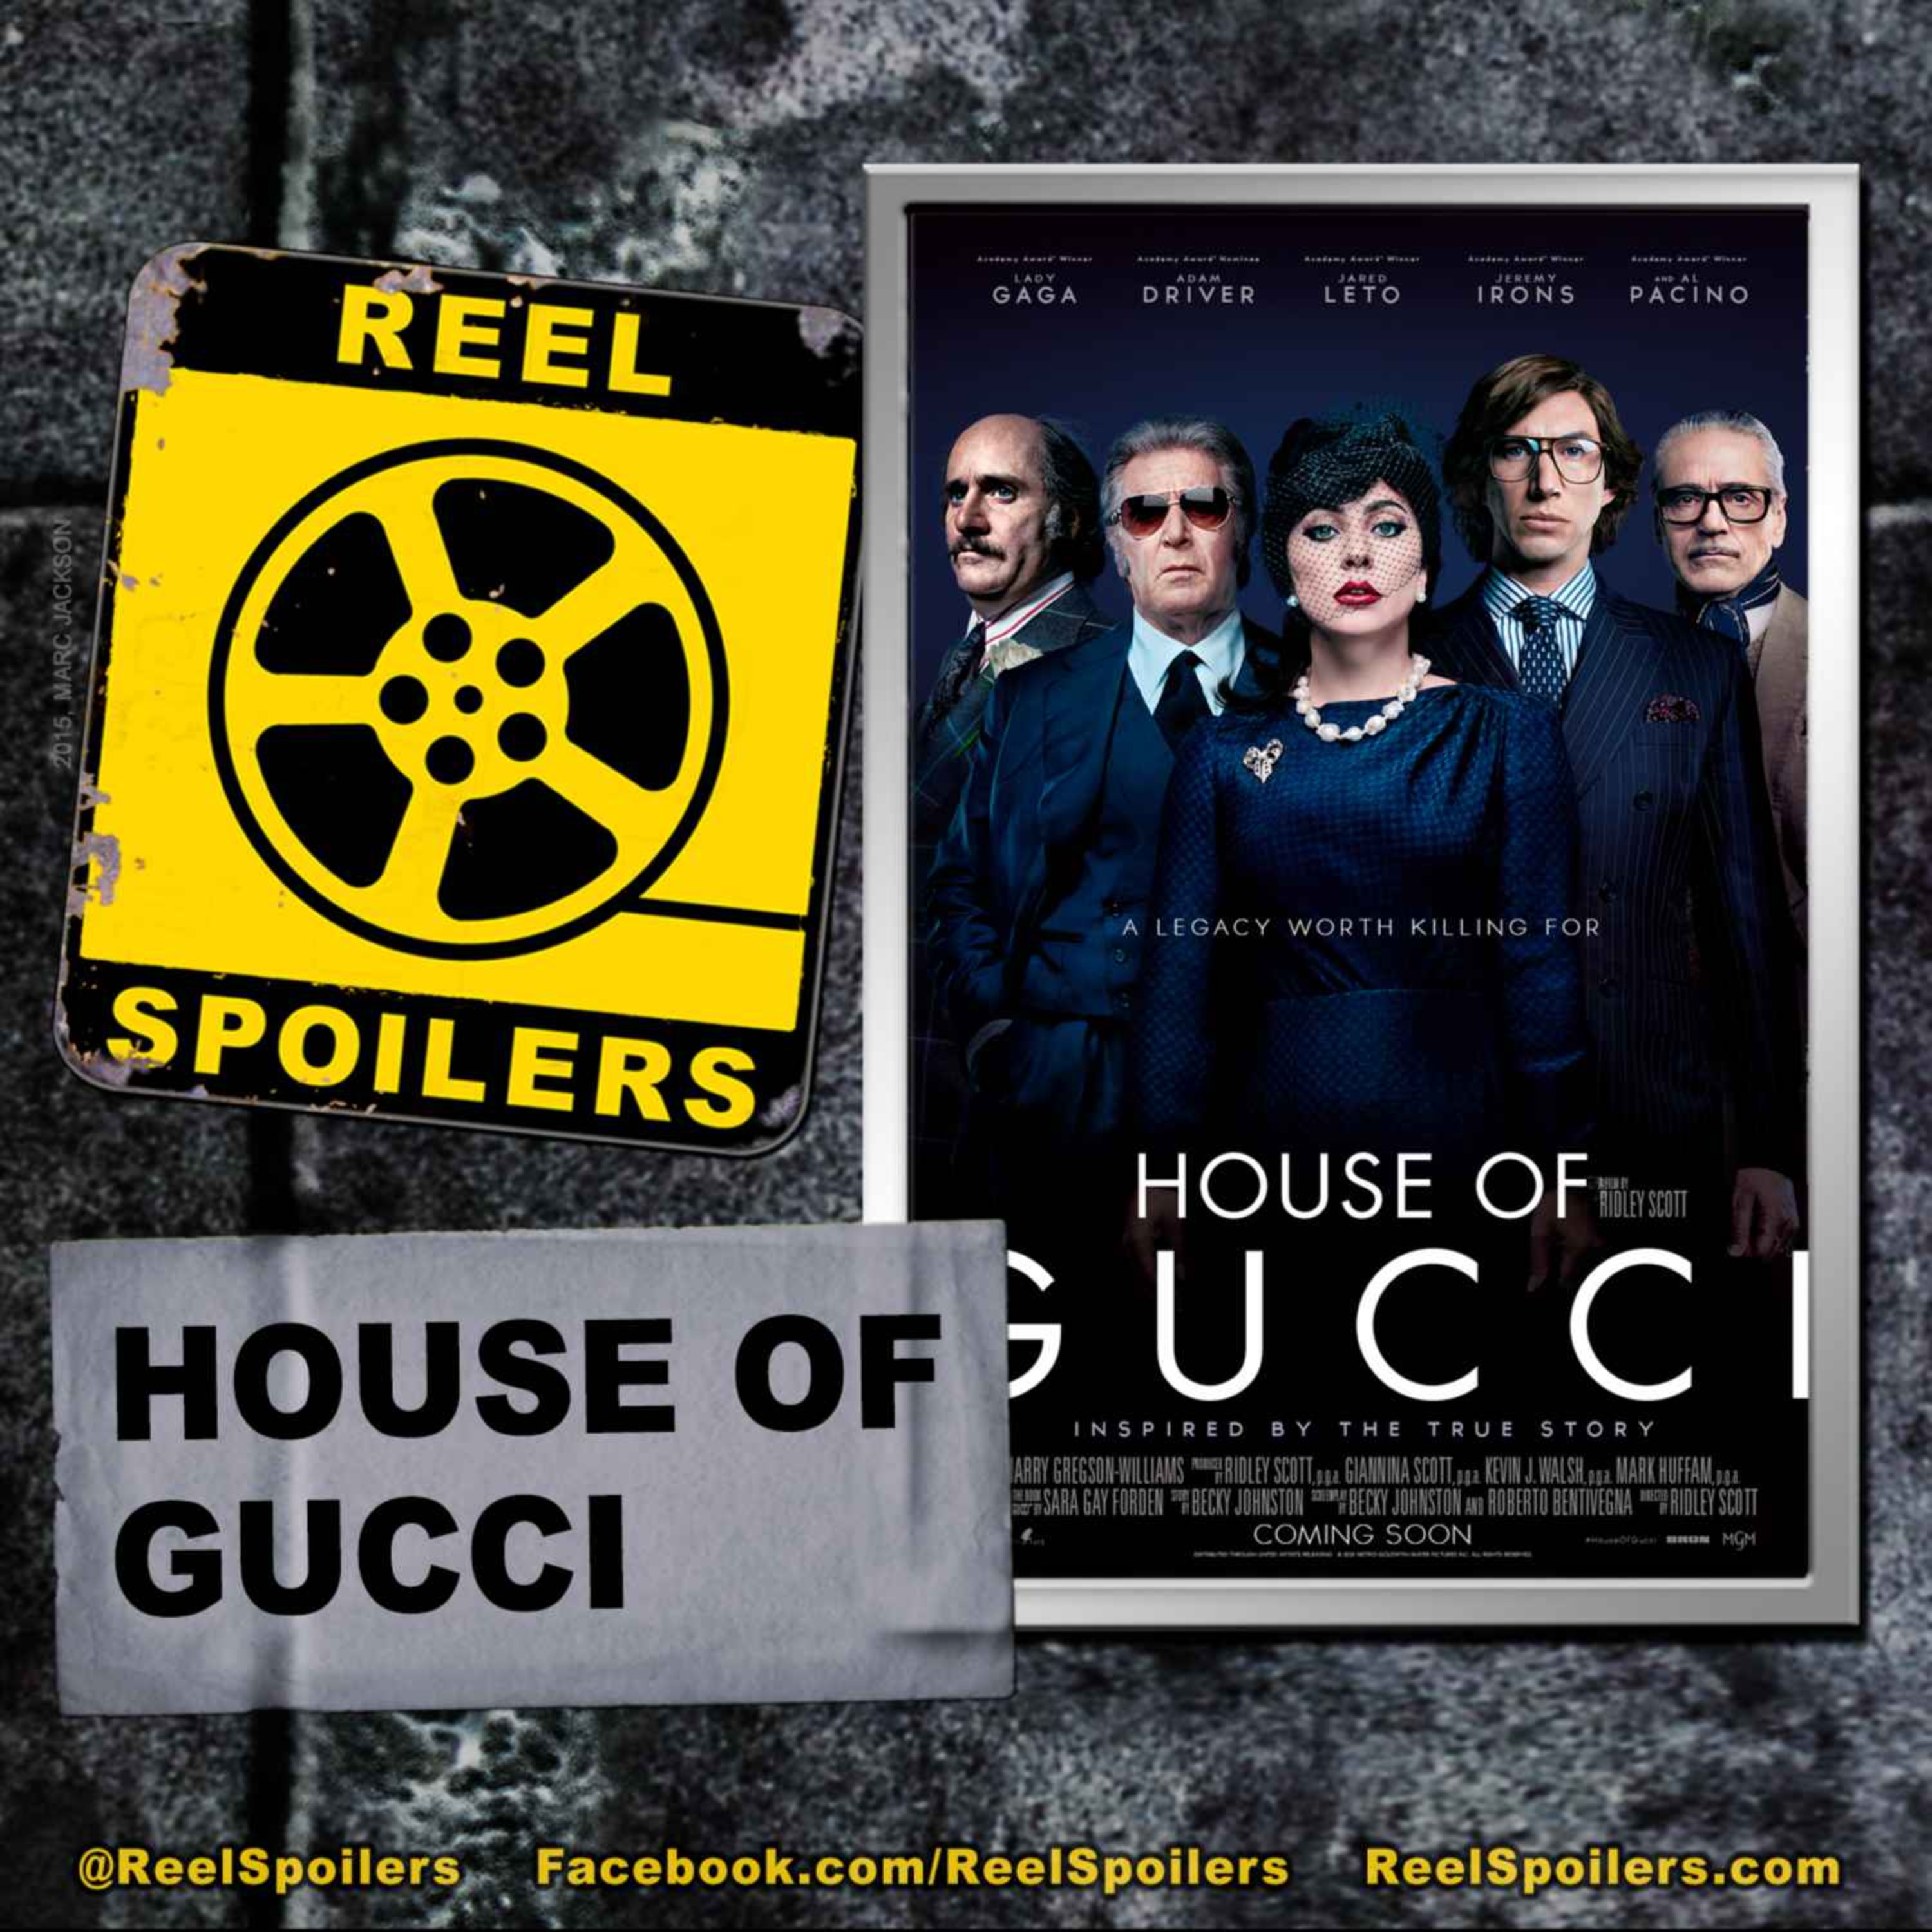 HOUSE OF GUCCI Starring Lady Gaga, Adam Driver, Al Pacino